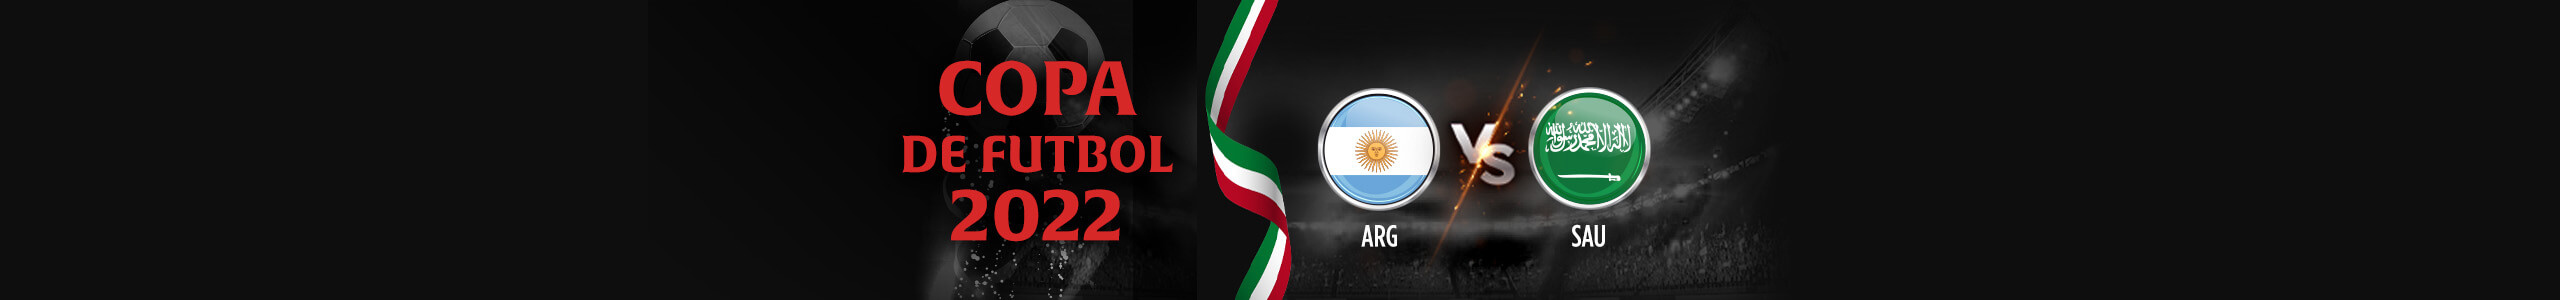 Copa Mundial 2022 - Argentina vs ArabiaSaudita